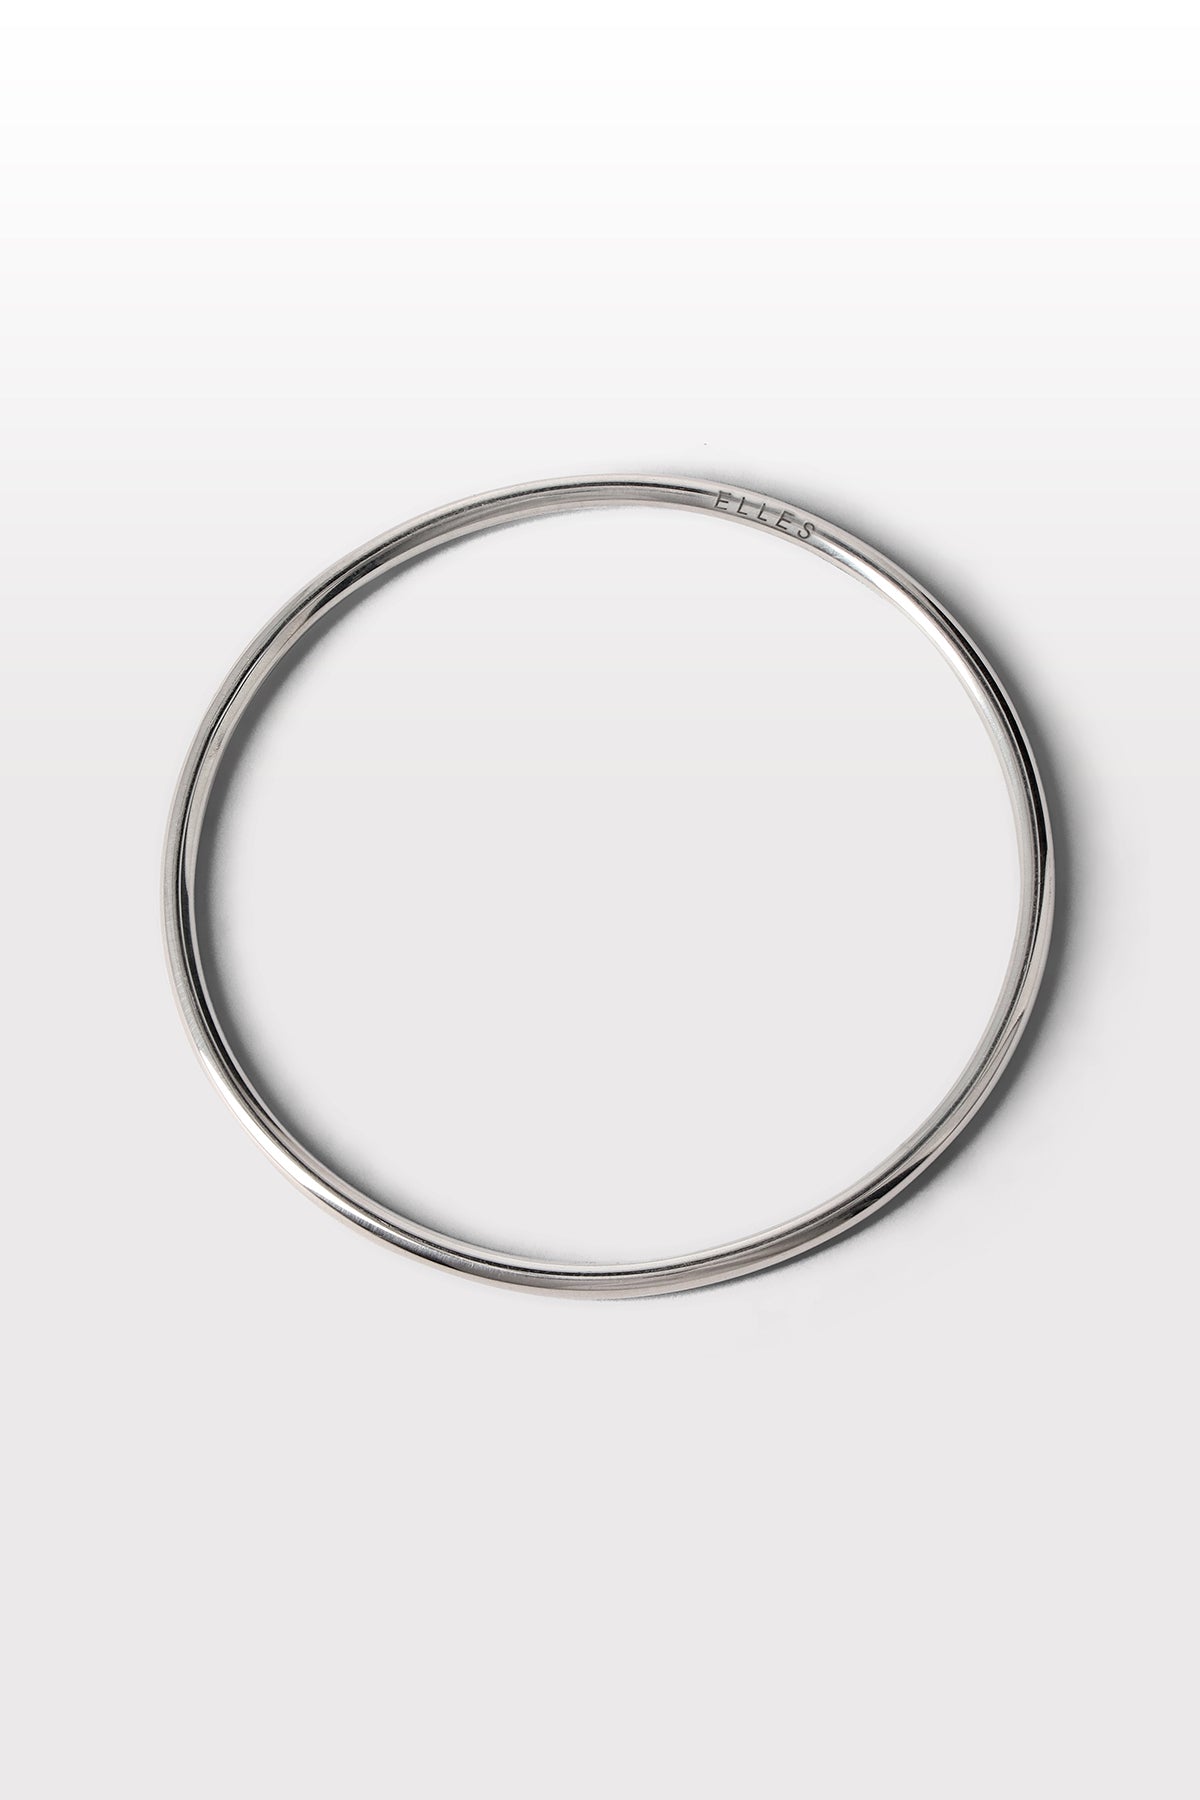 ODE+ Bracelet 01 Silver